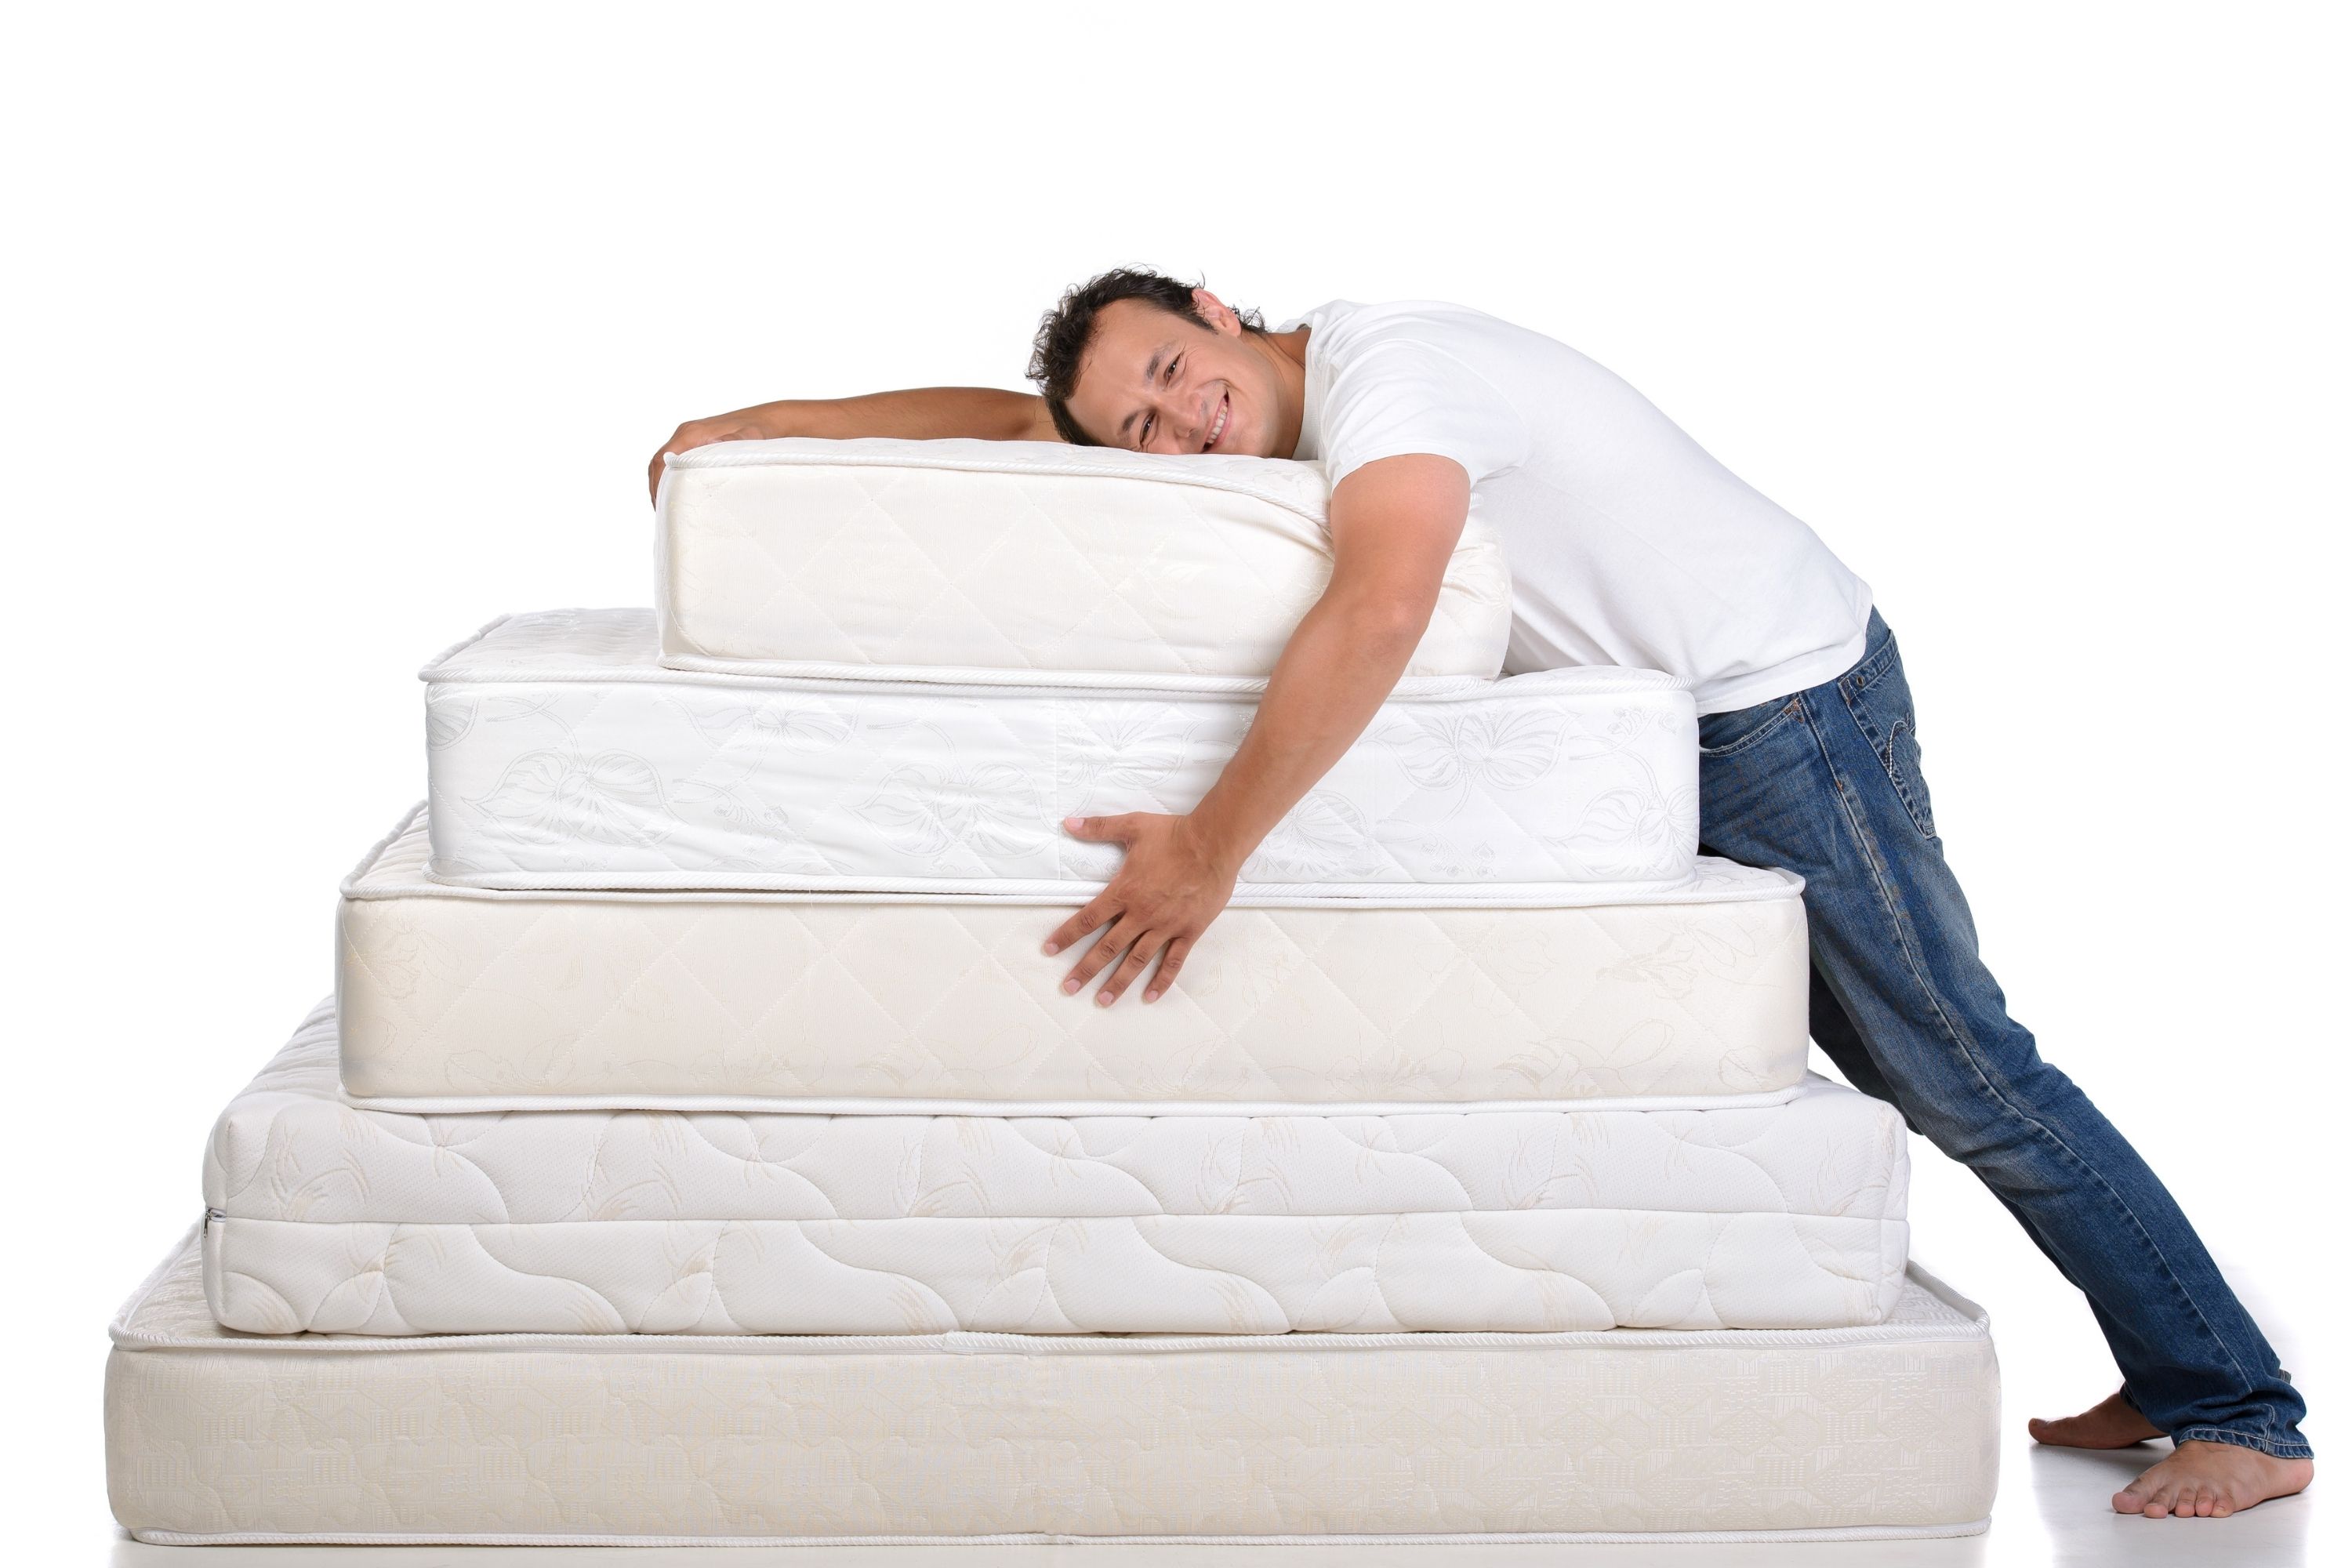 Hybrid mattresses